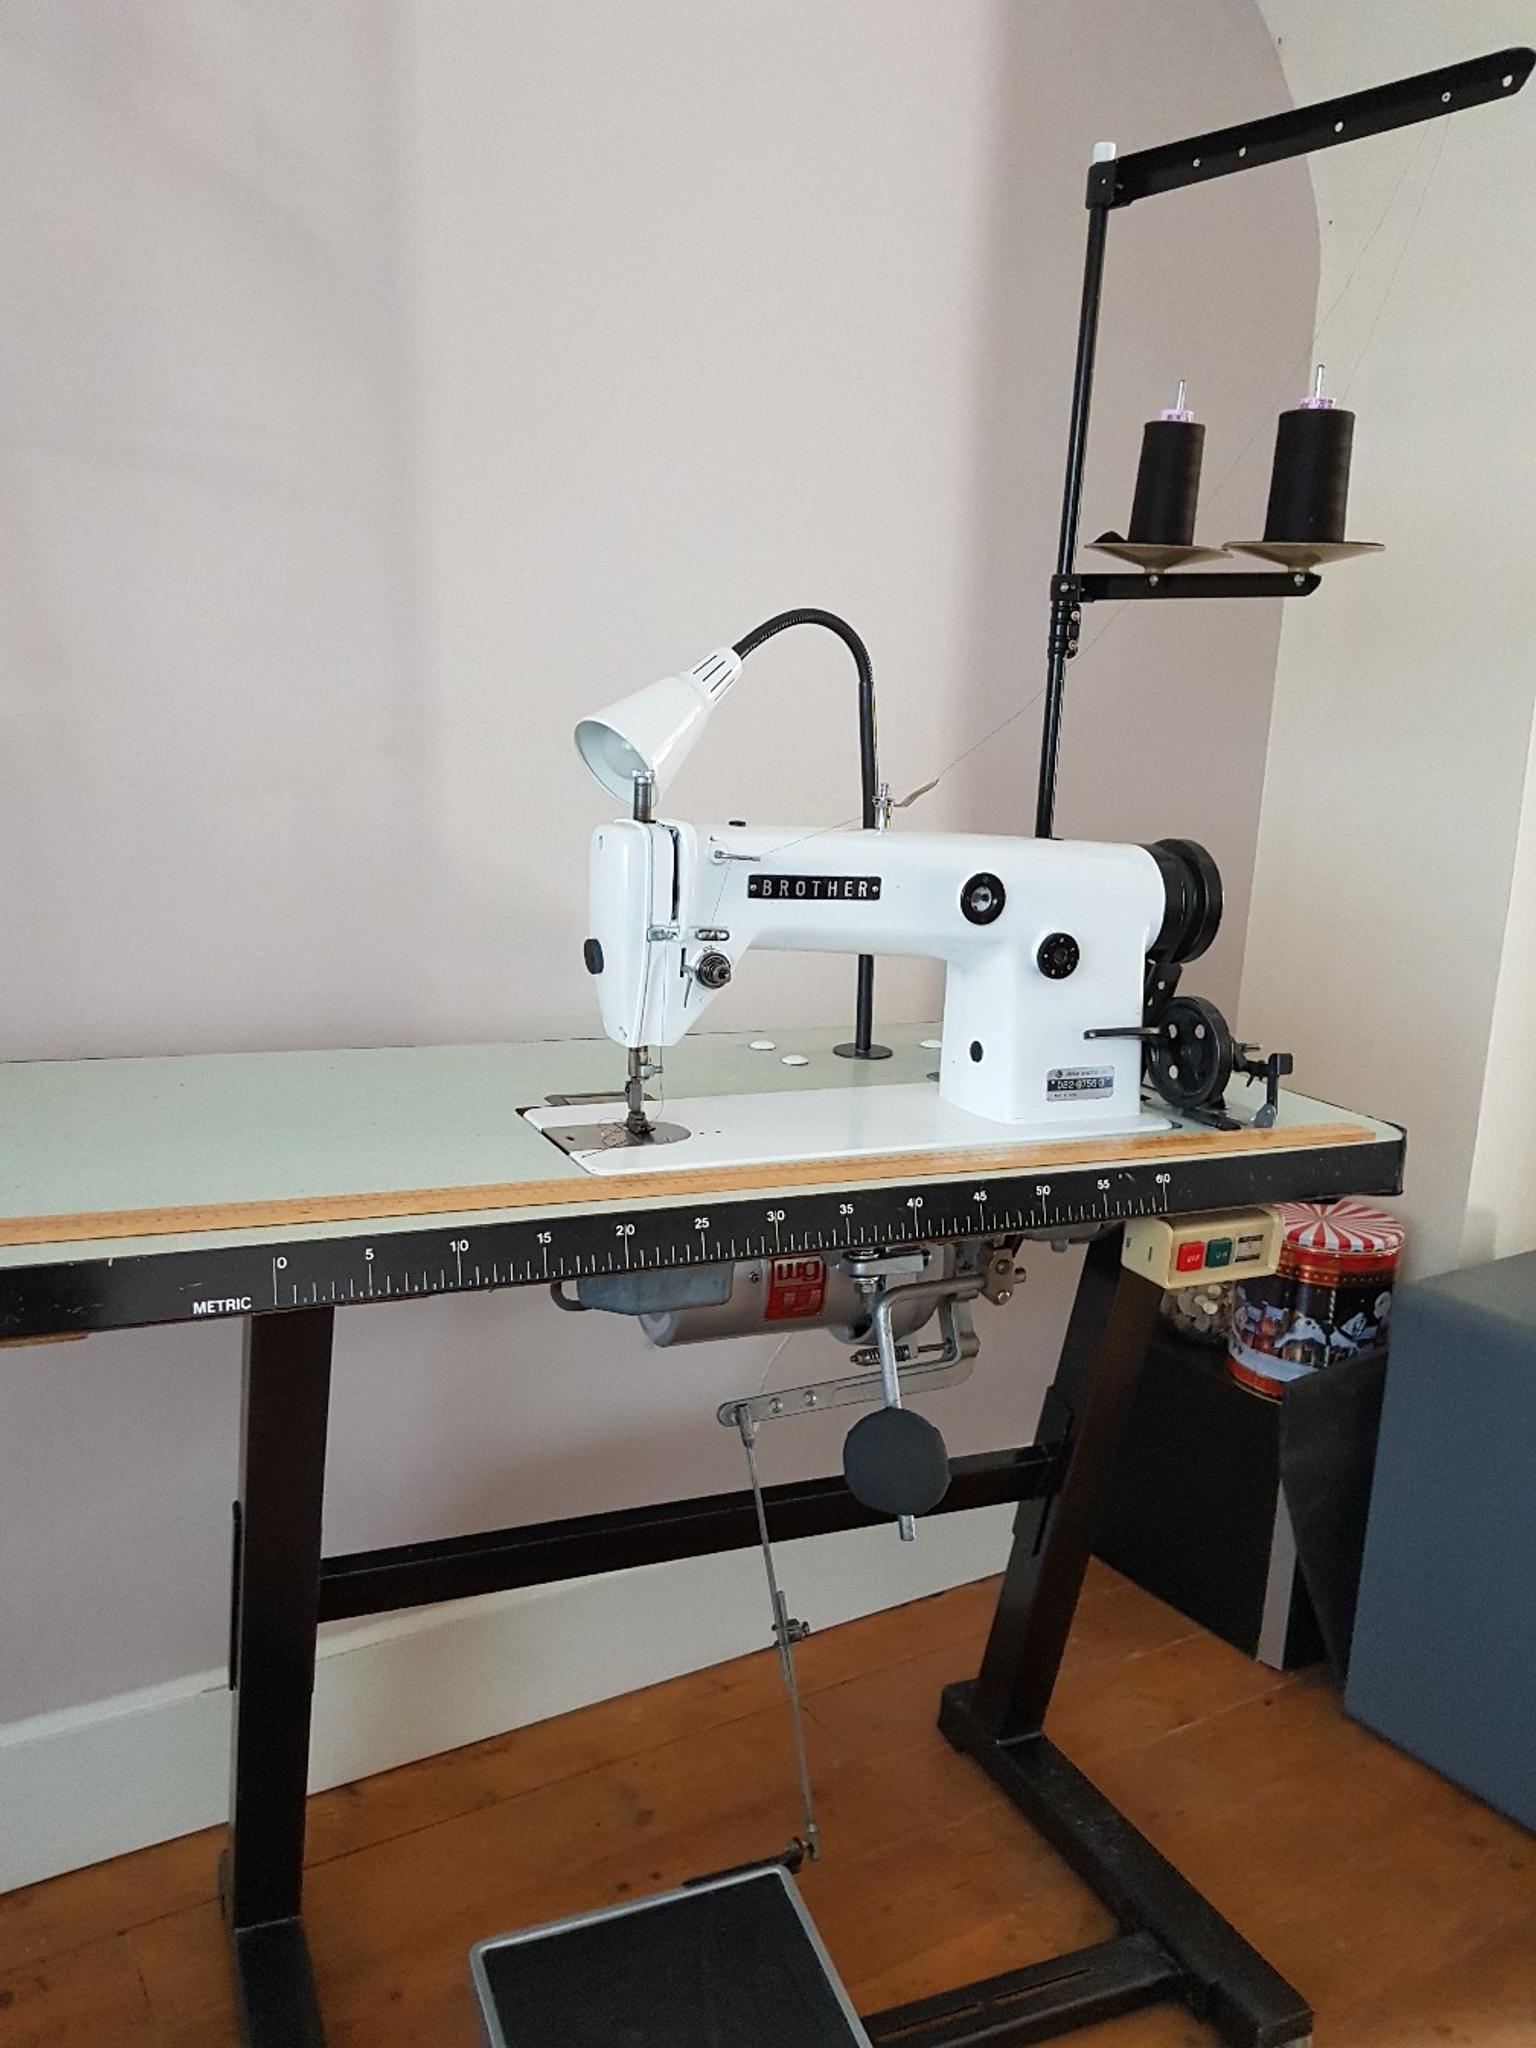 Sewing Machine In B45 Birmingham Fur 270 00 Zum Verkauf Shpock De